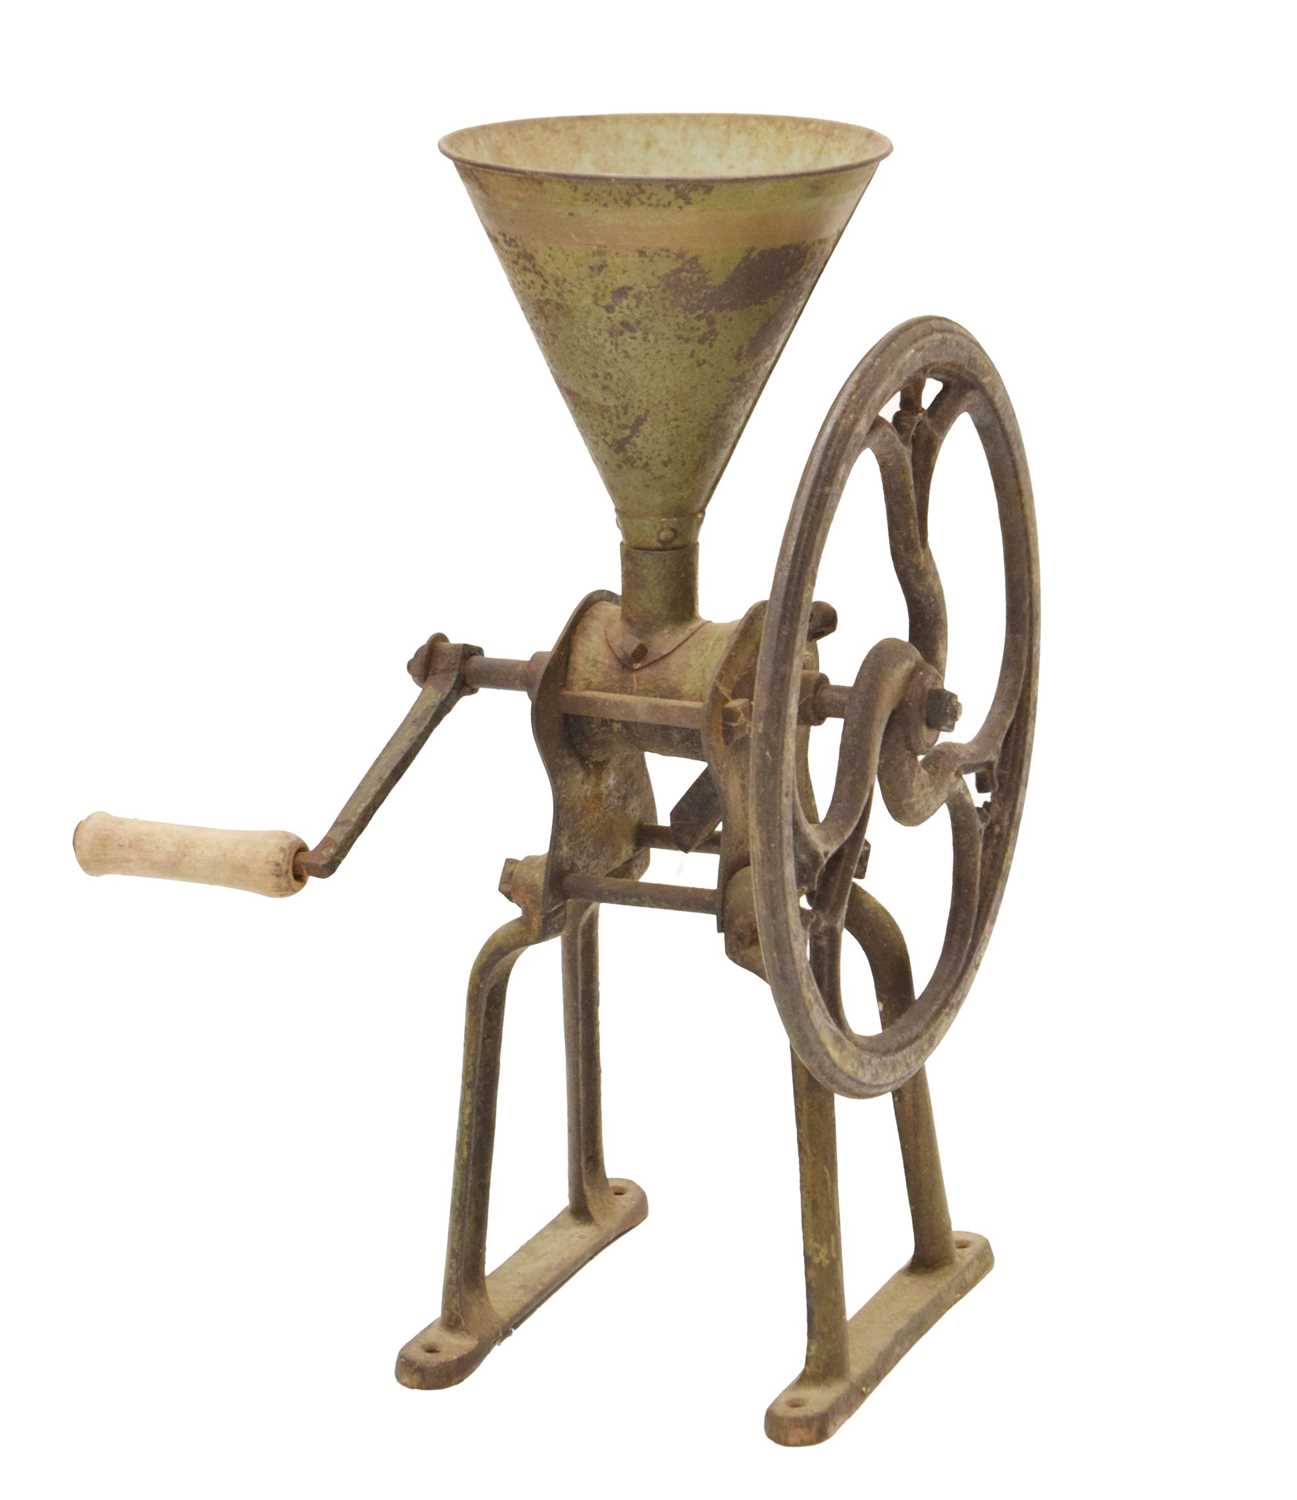 Late 19th century metal coffee grinder